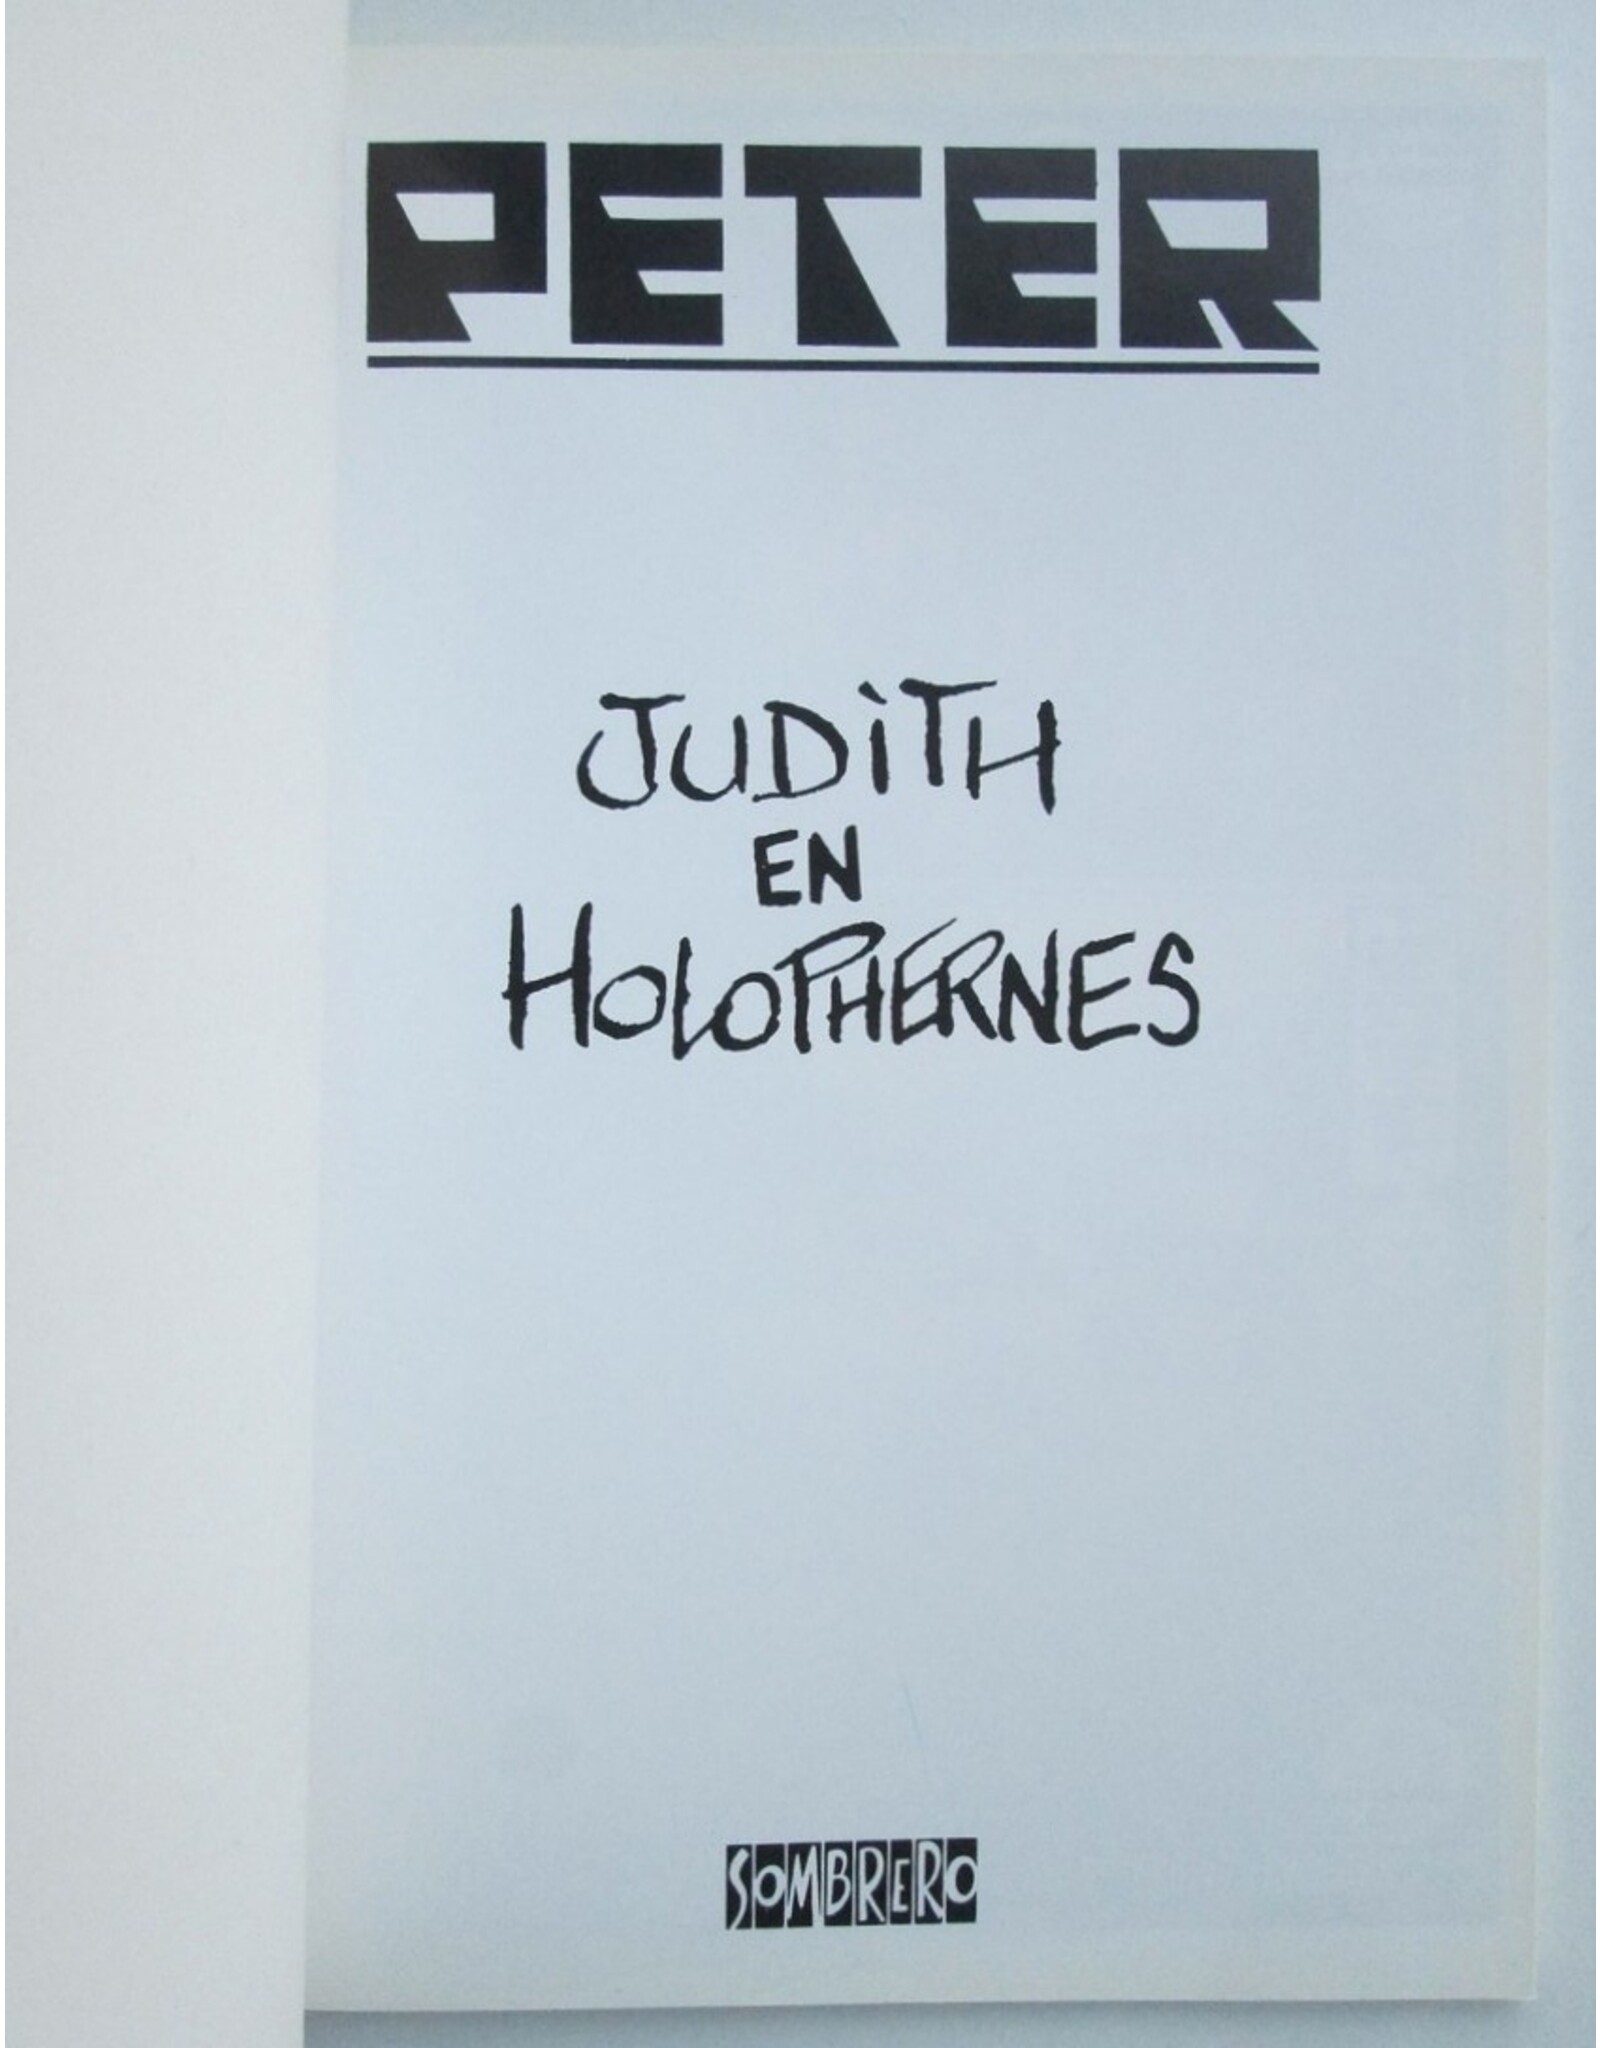 Peter - Judith en Holo